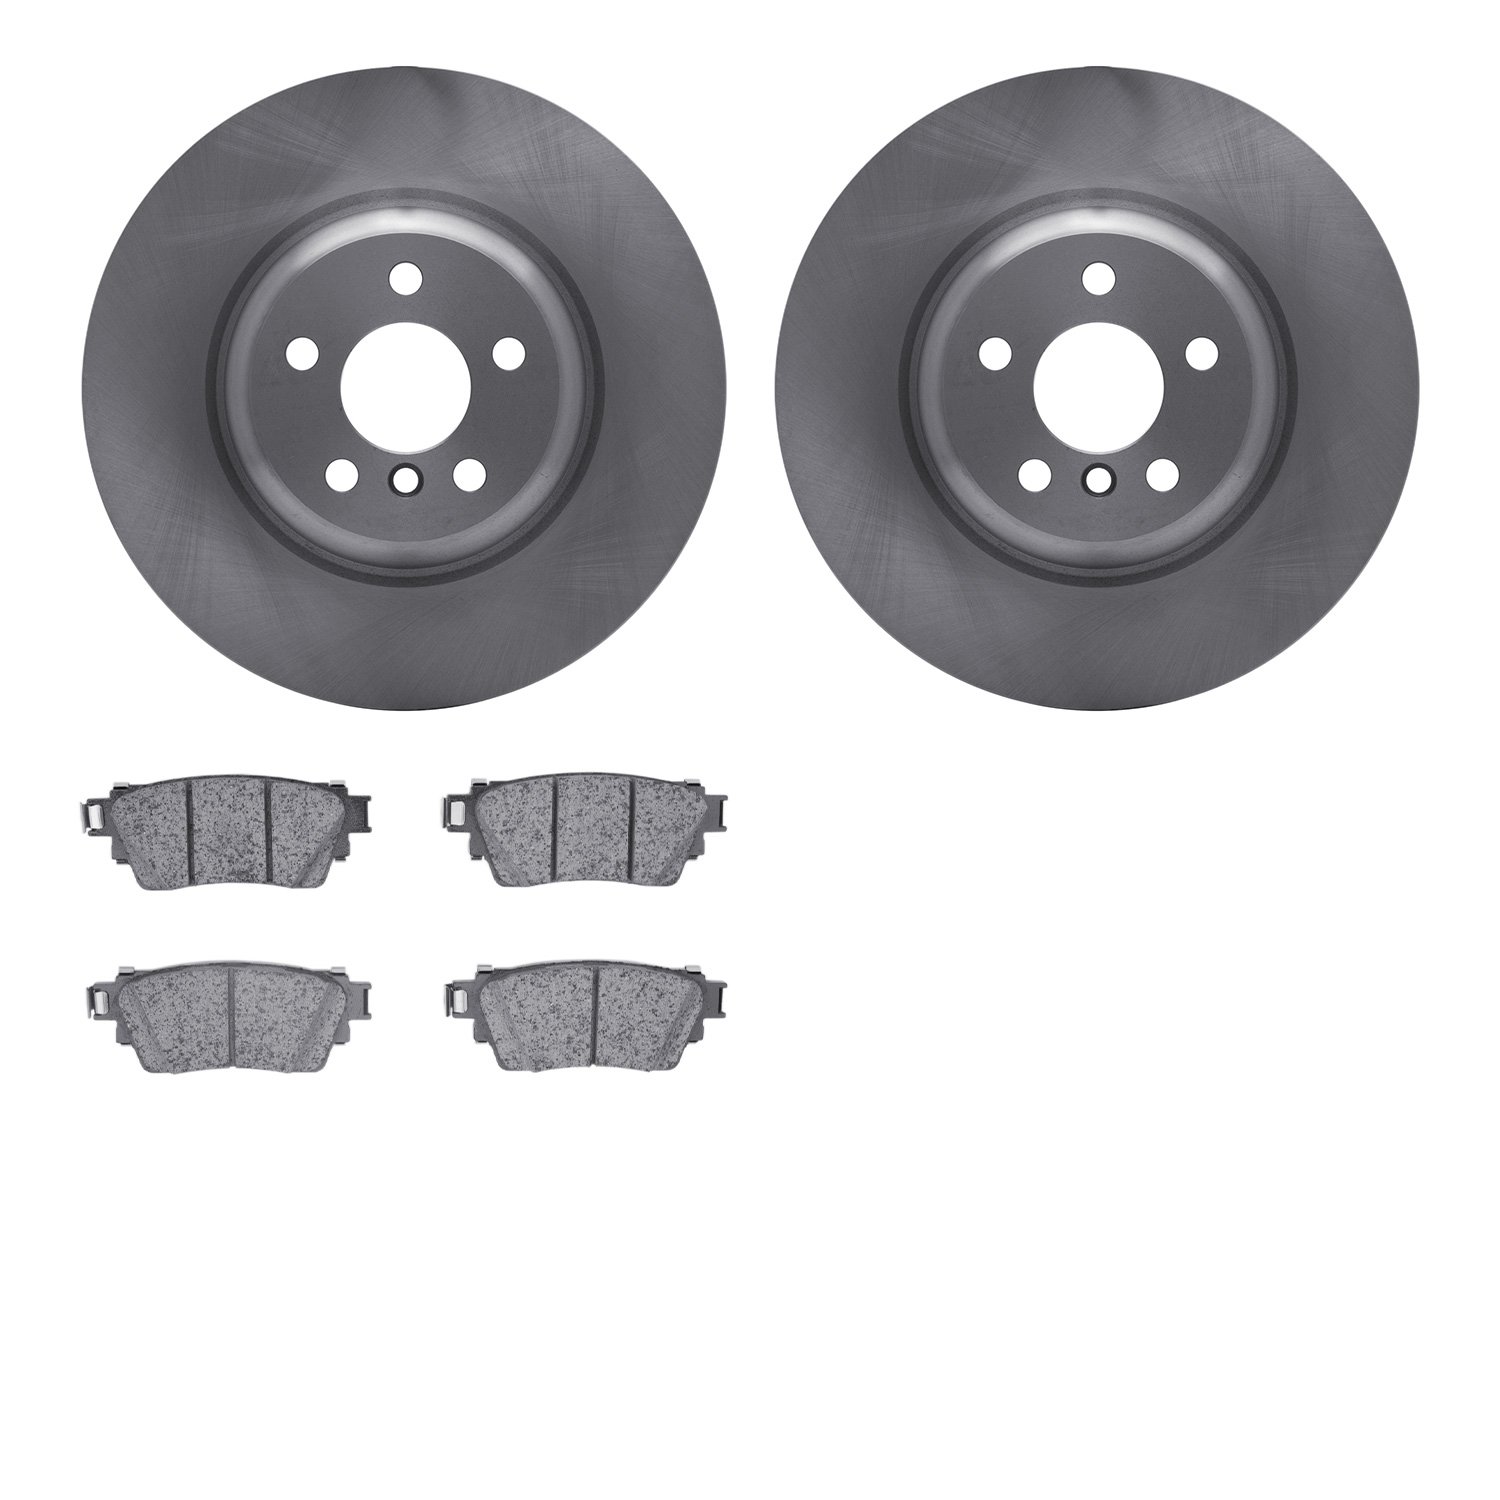 6502-31617 Brake Rotors w/5000 Advanced Brake Pads Kit, Fits Select Multiple Makes/Models, Position: Rear